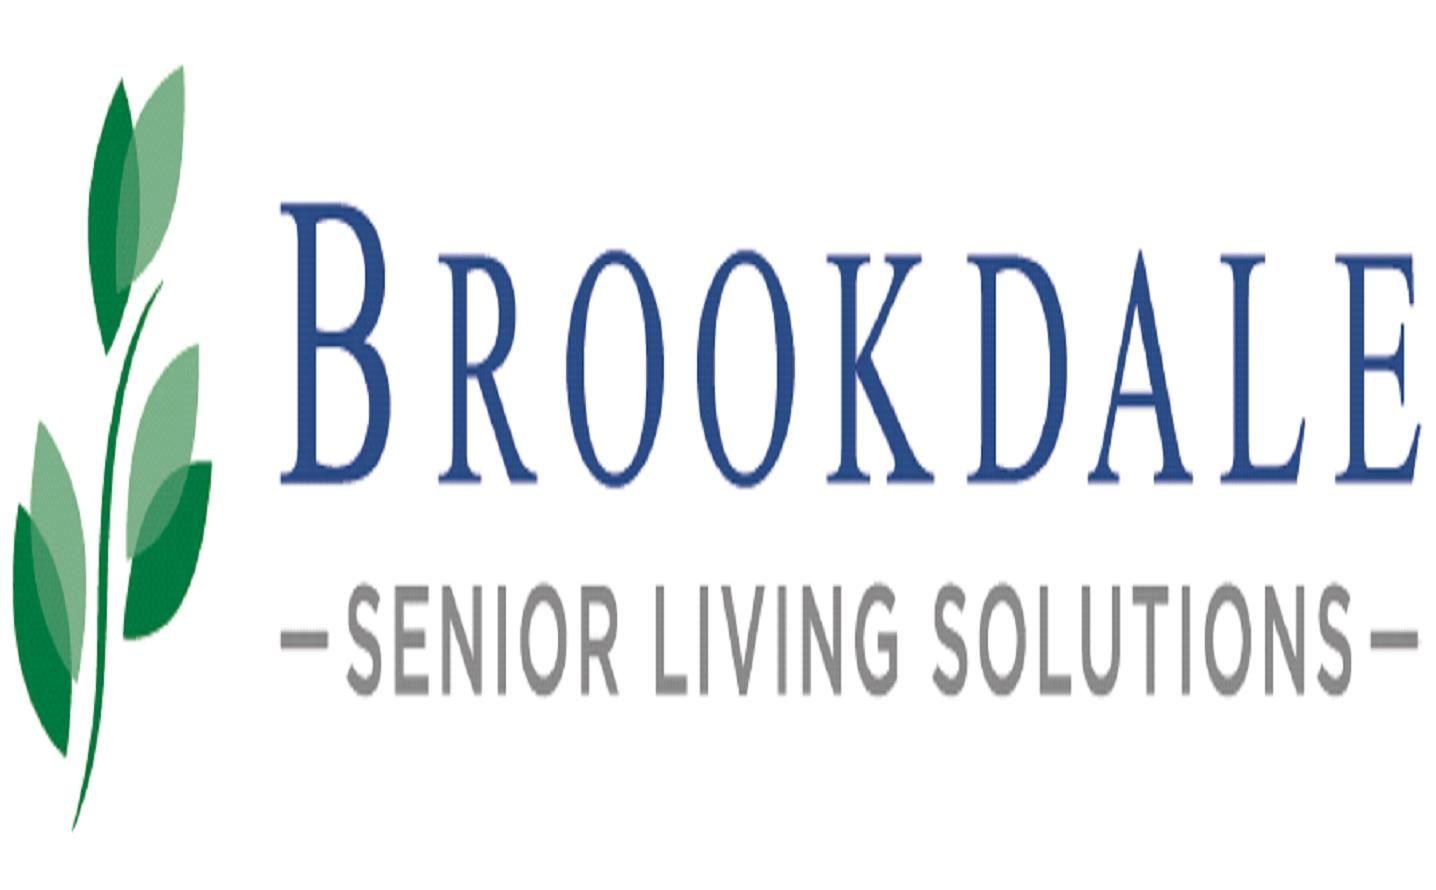 Brookdale Logo - EDGAR Filing Documents for 0001332349-15-000037